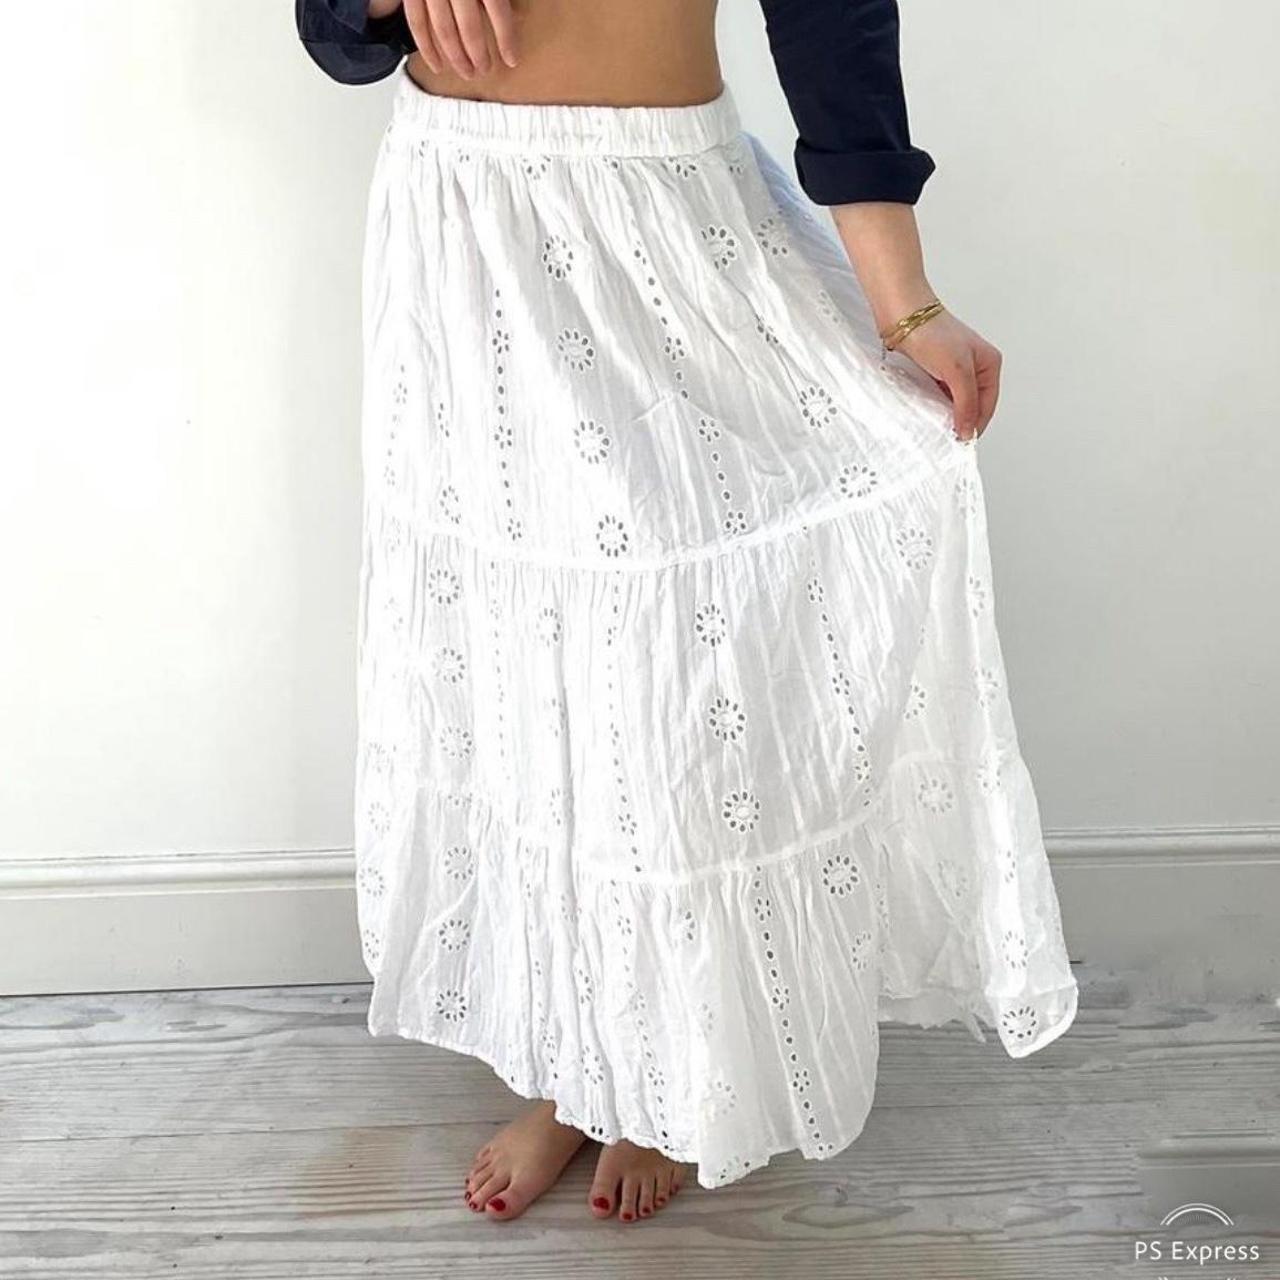 White tiered maxi skirt Prettiest Broderie... - Depop